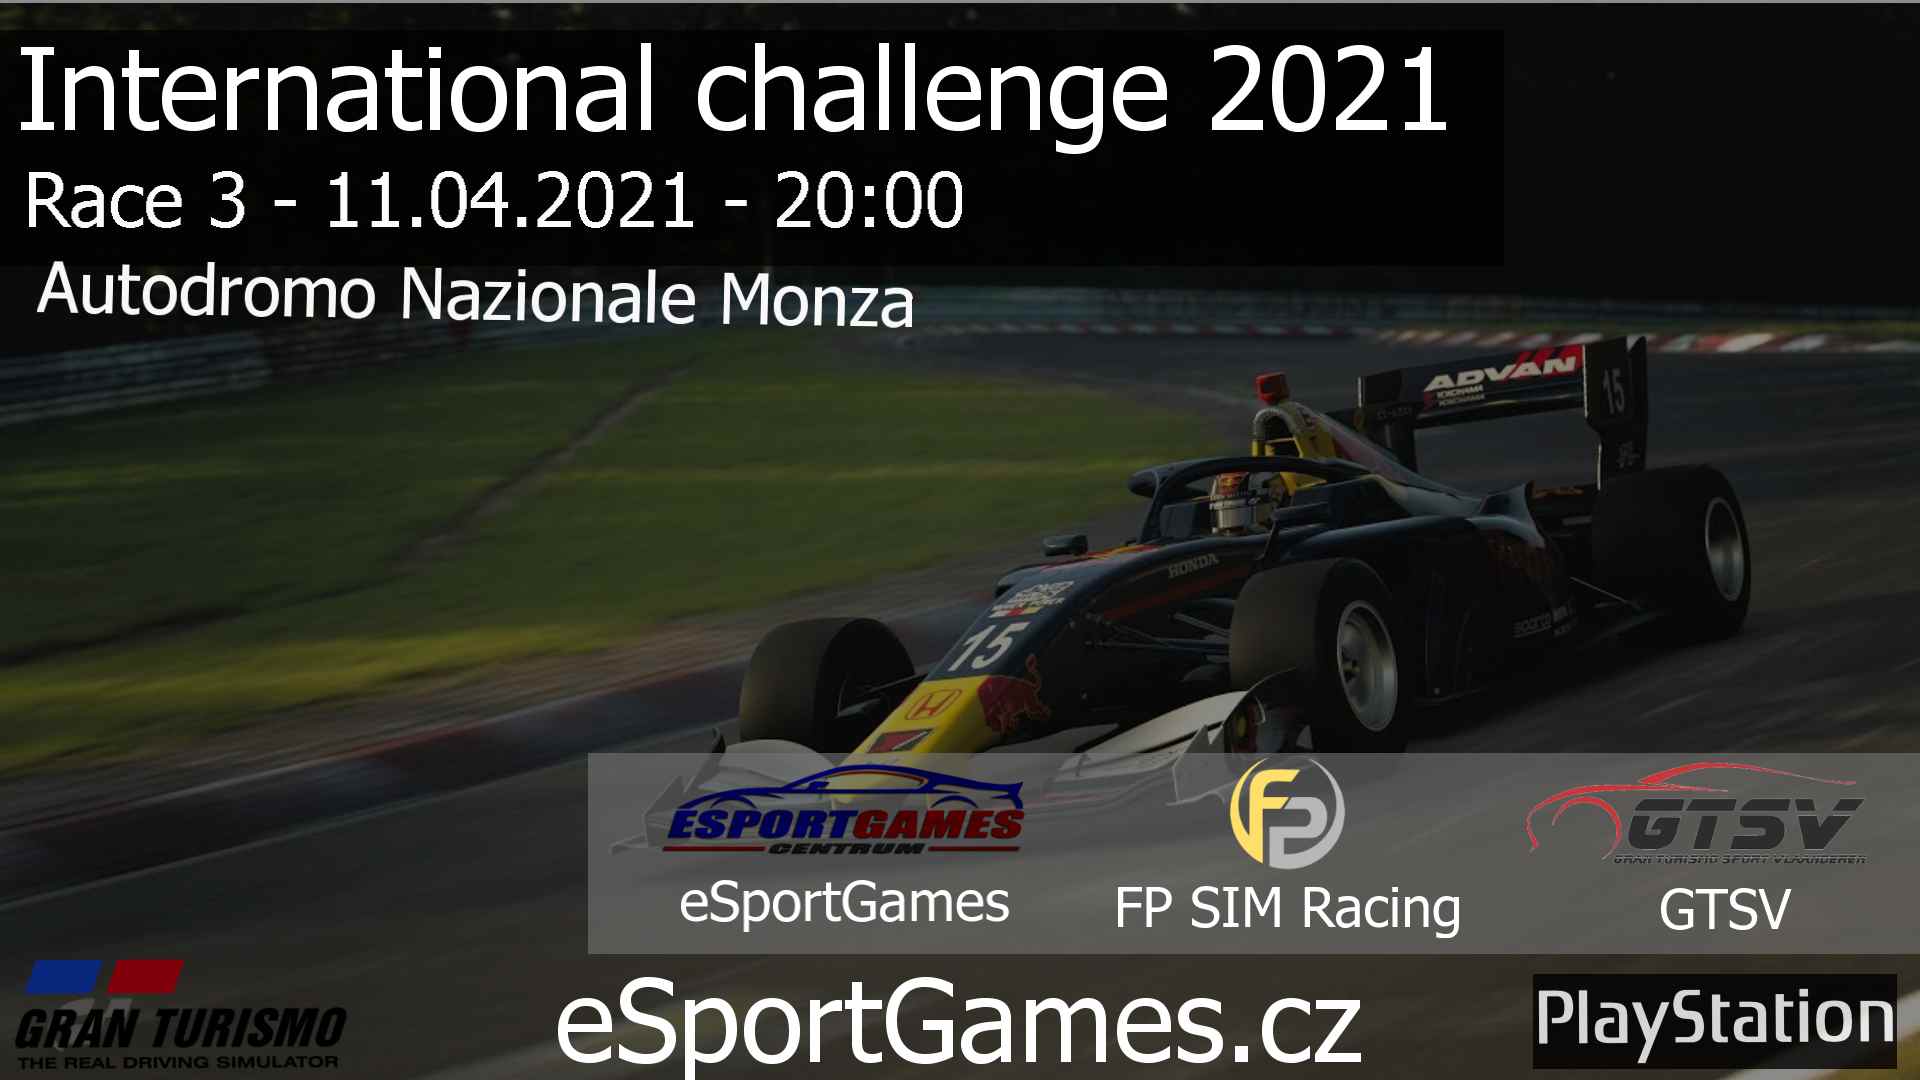 International challenge 2021 - Race 3 - Autodromo Nazionale Monza